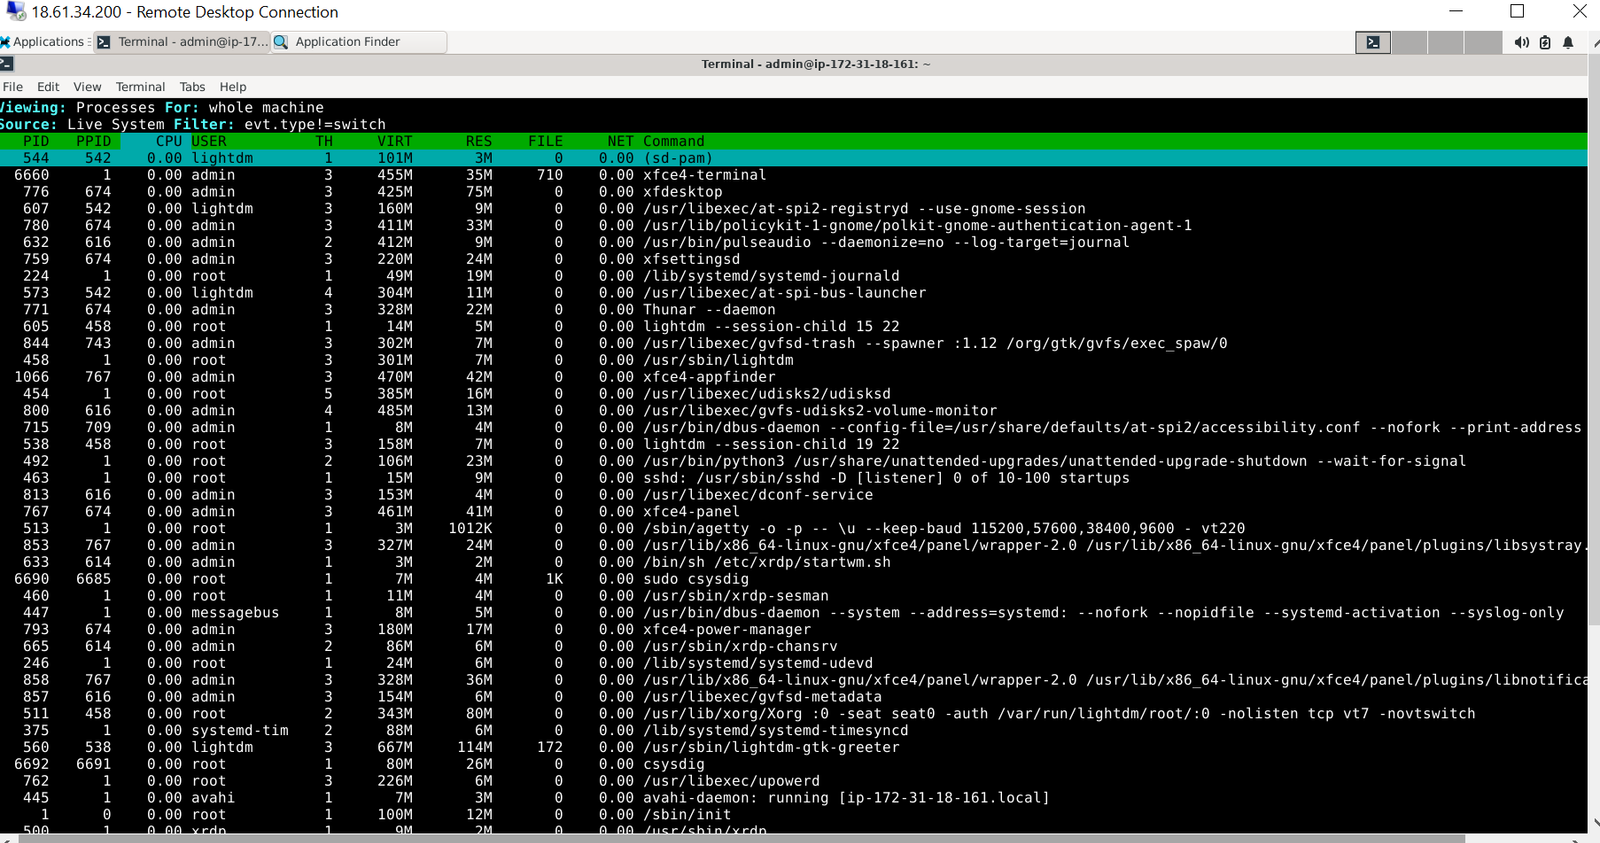 Screengrab showcasing the cysdig terminal settings menu on a Debian Linux system.